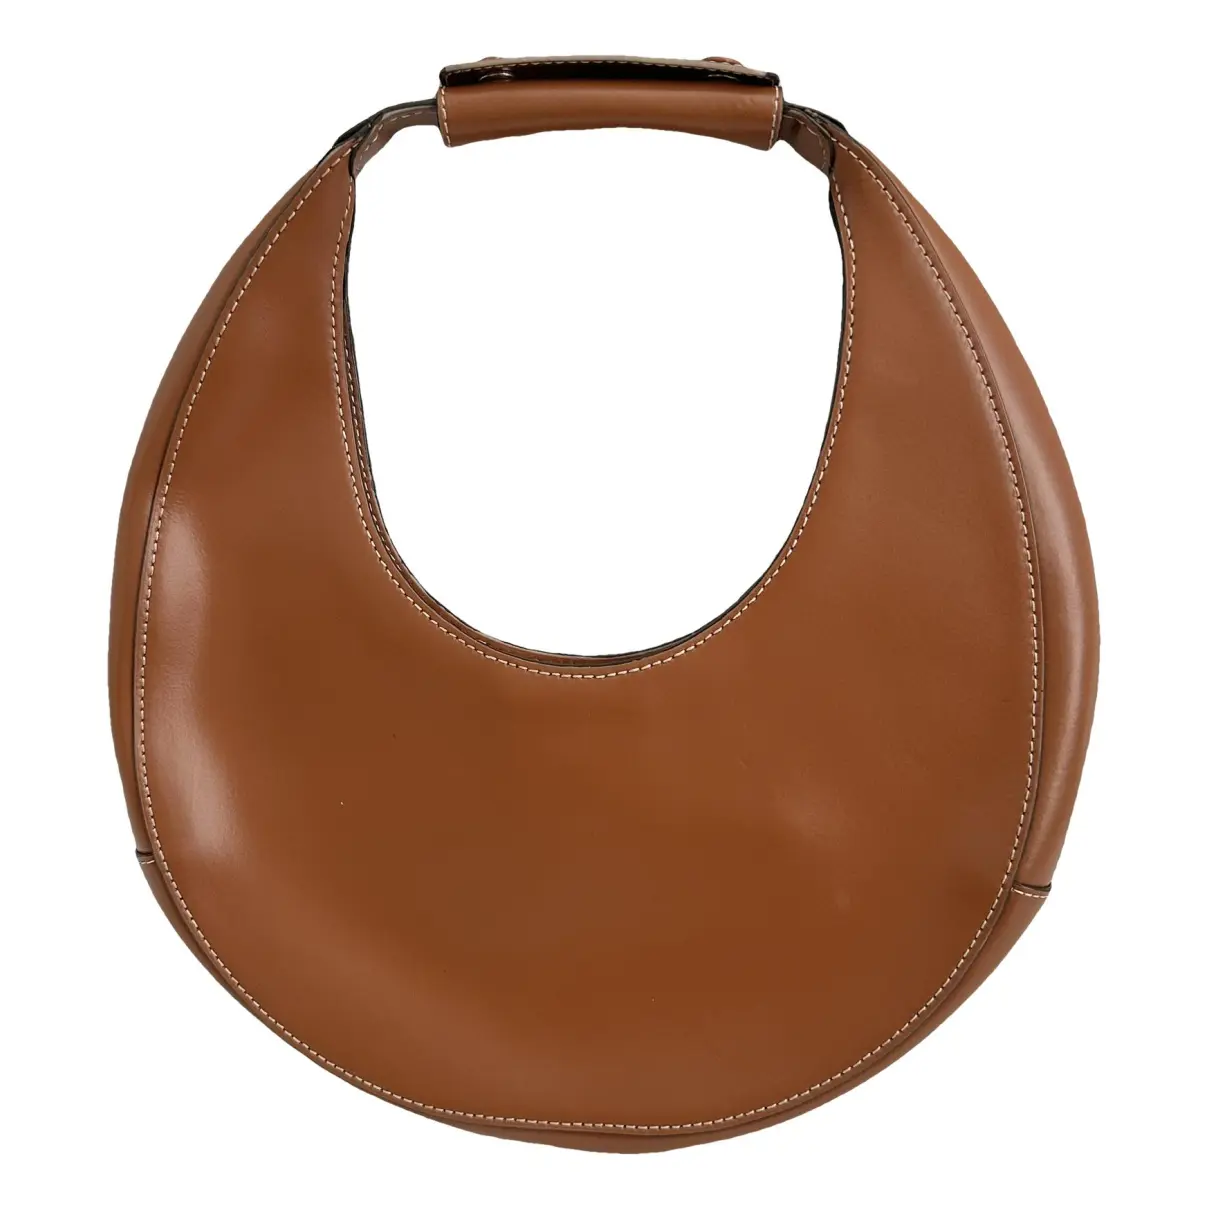 Moon leather handbag